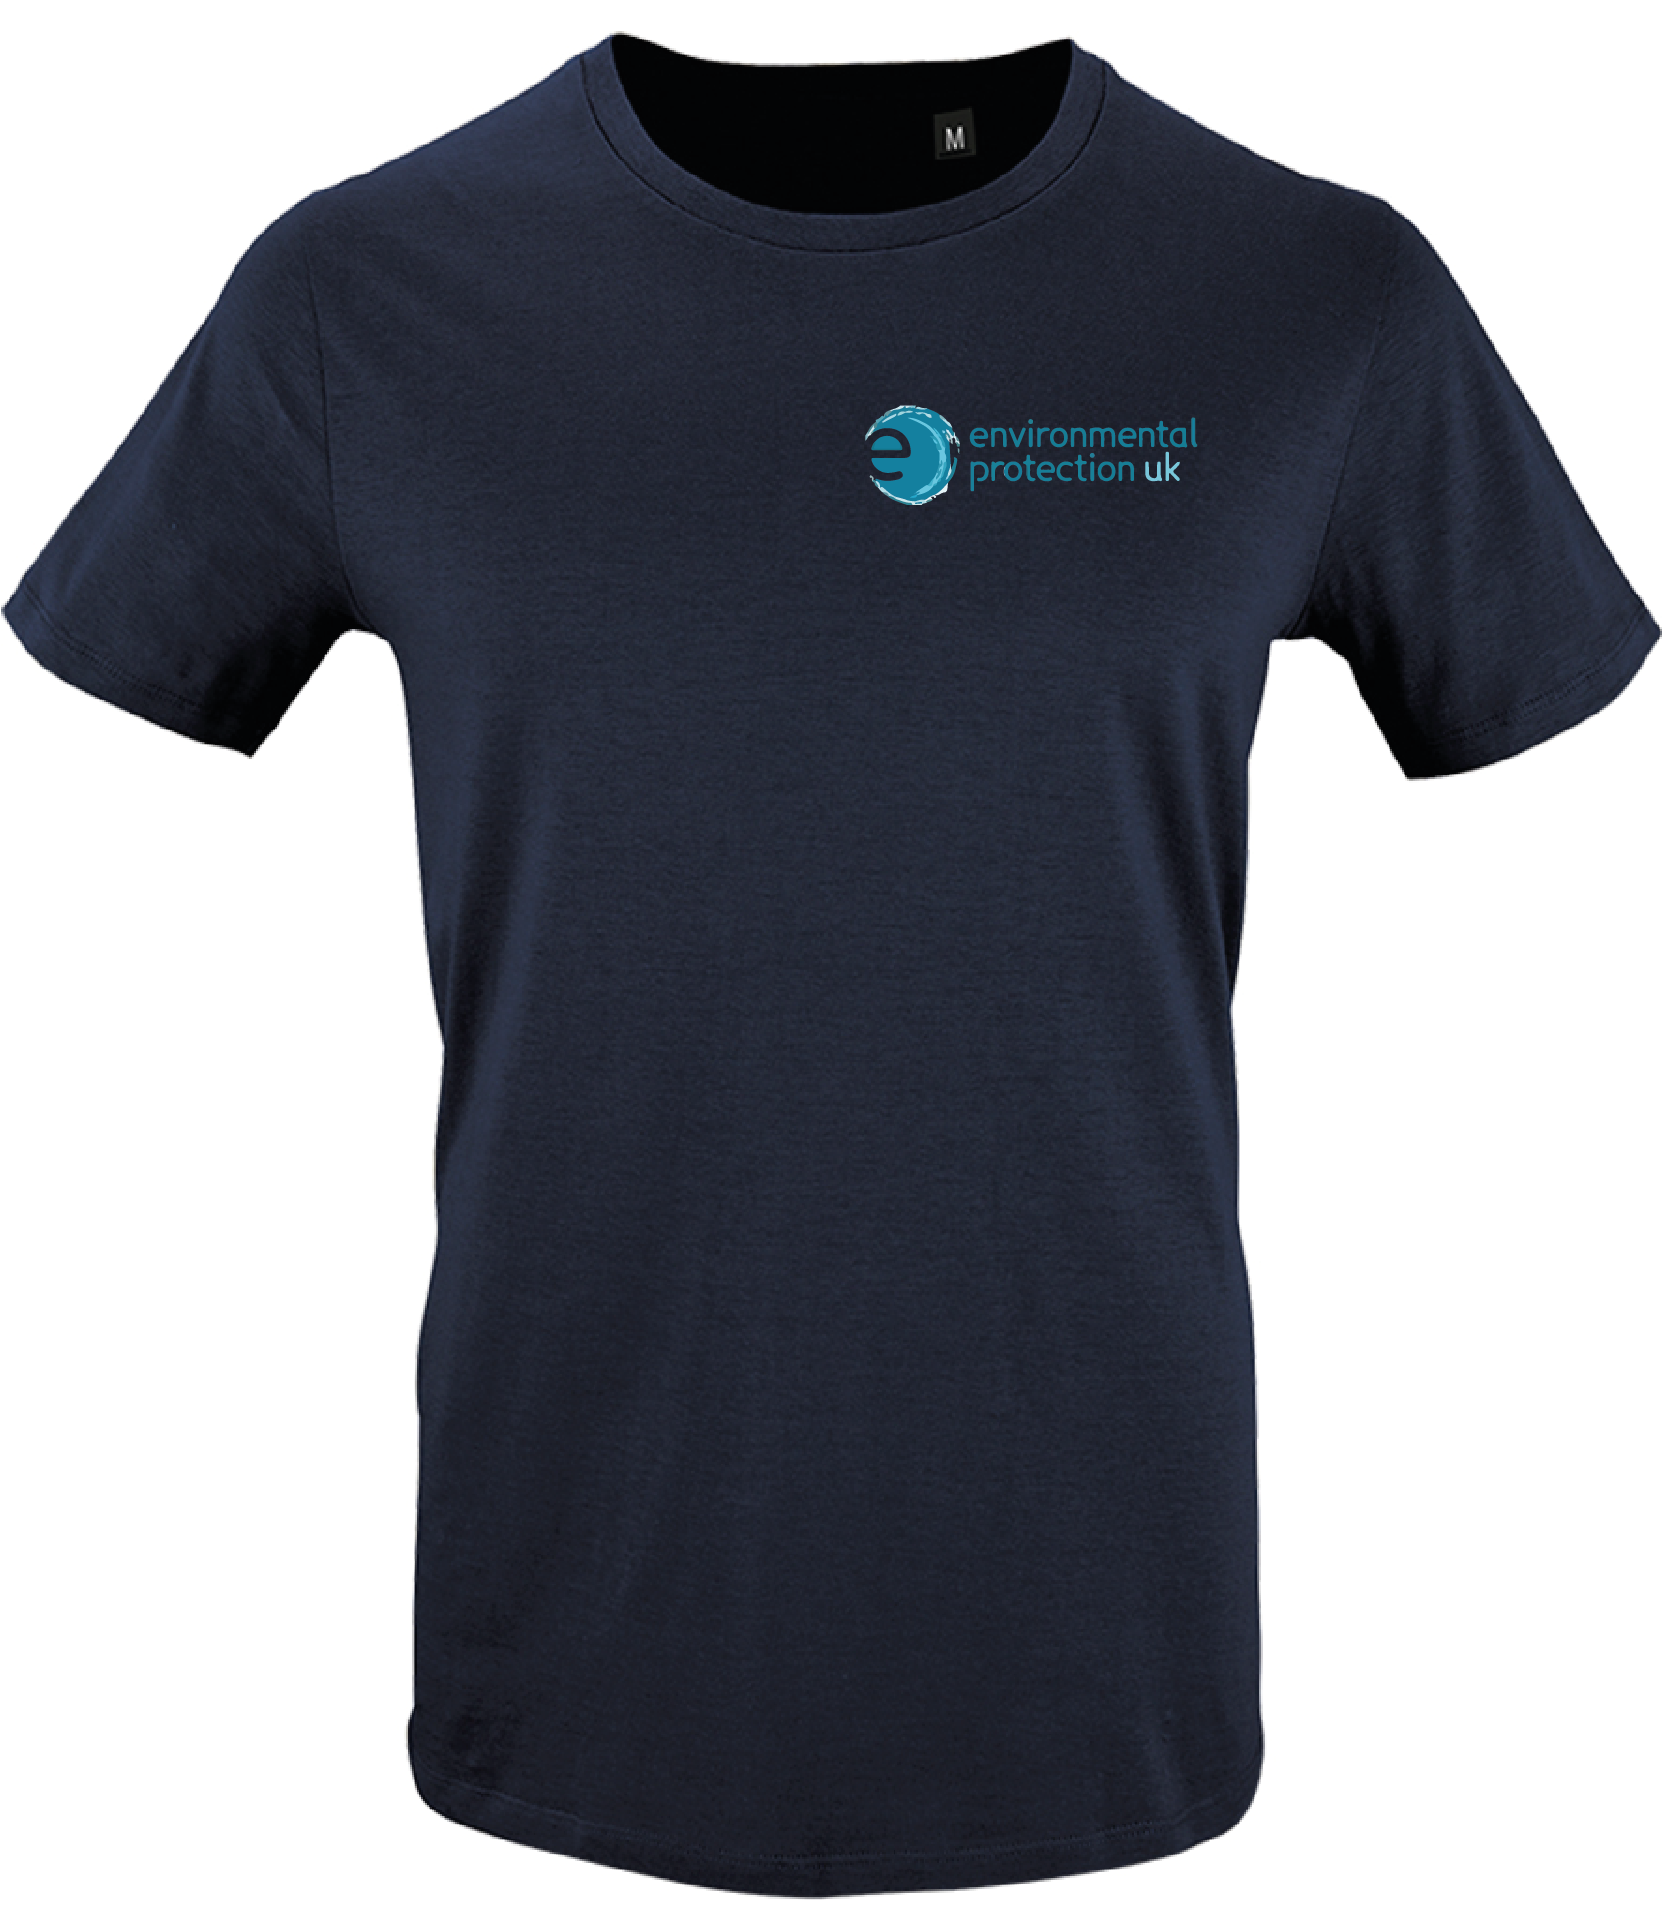 Environmental Protection UK T-shirt - OHM Charities